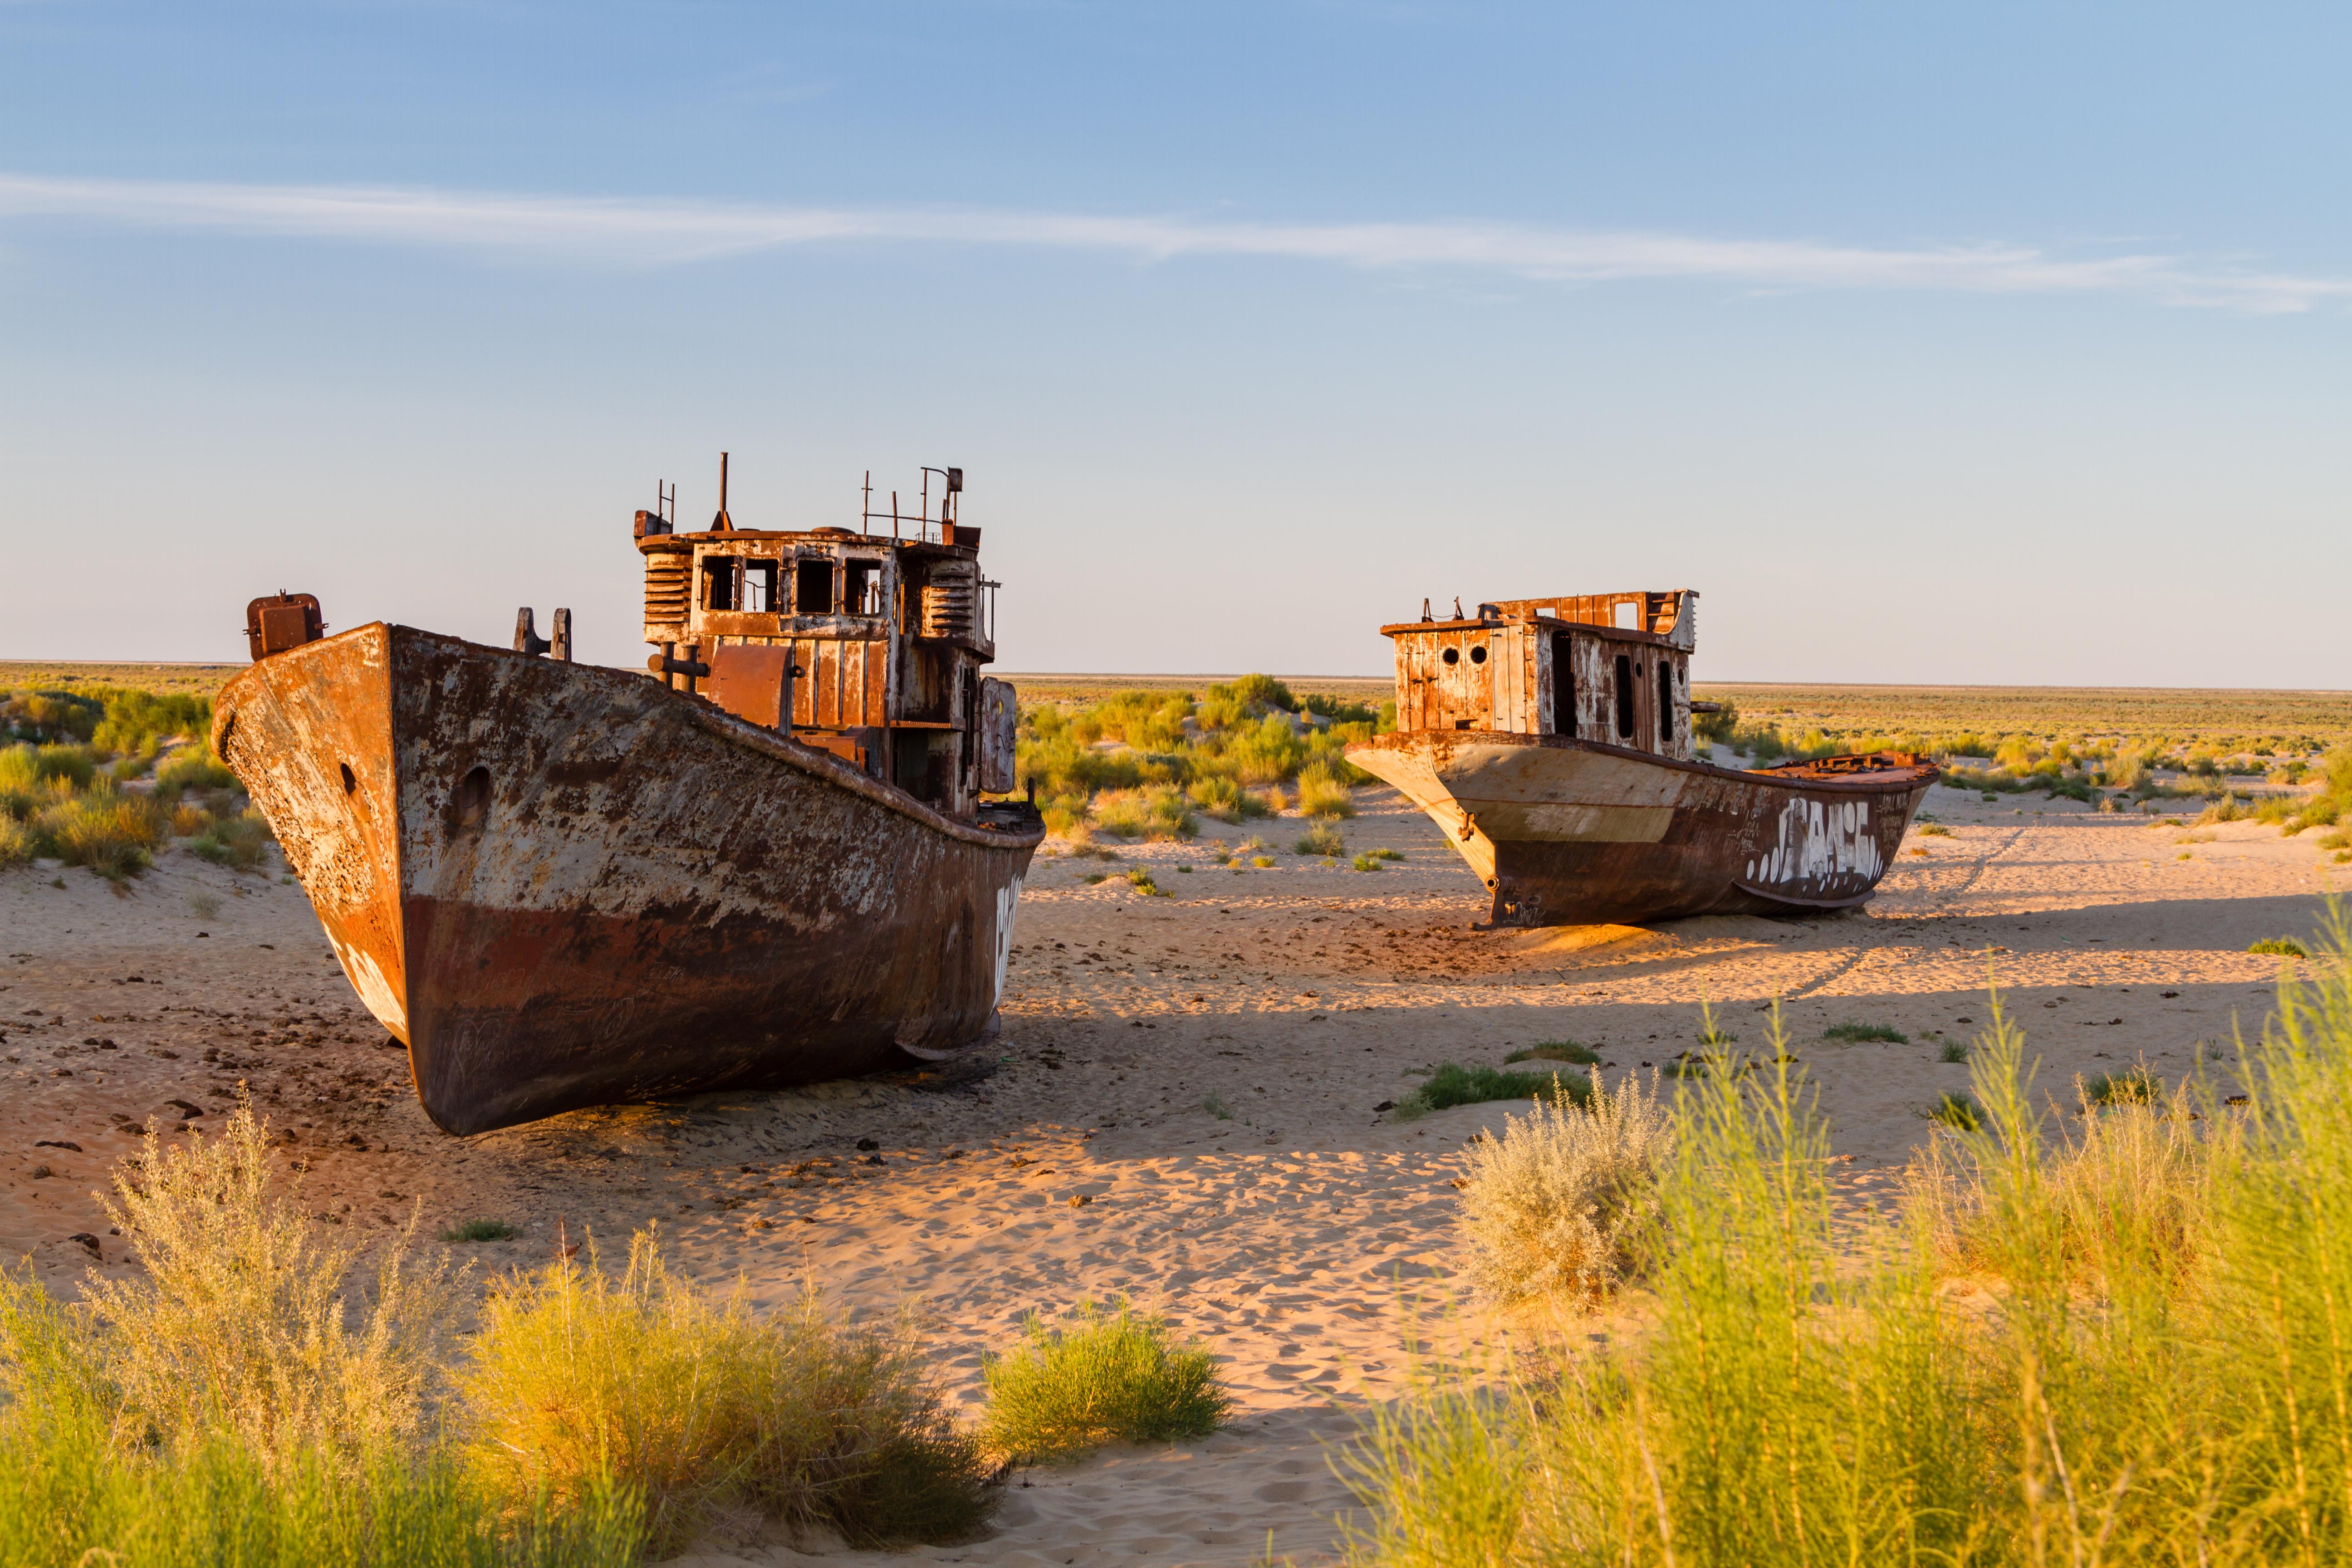 Boats abandoned at the port of Muynak © Milosz Maslanka / Shutterstock